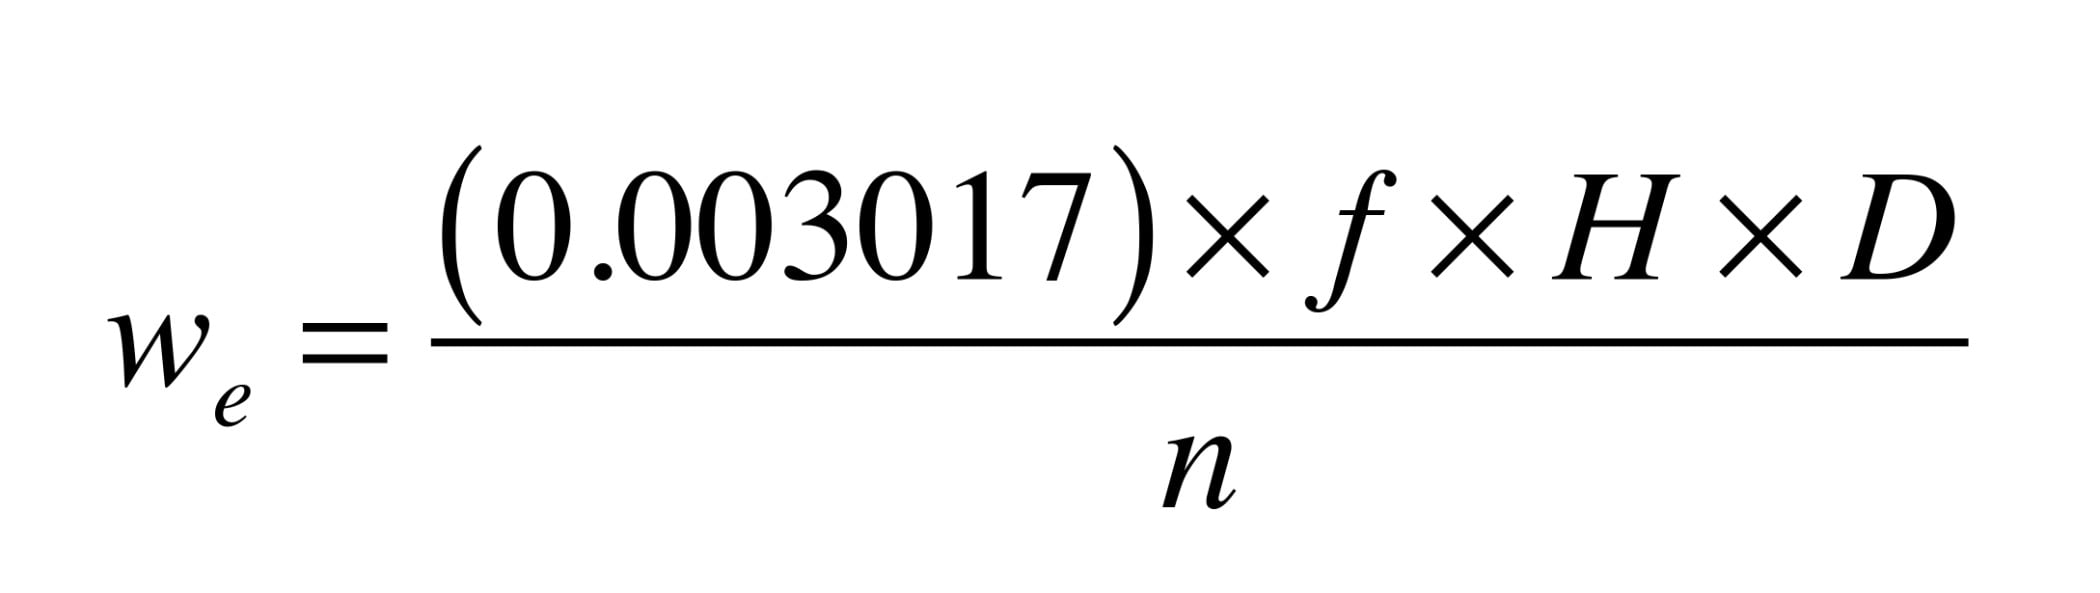 Equation 1 1